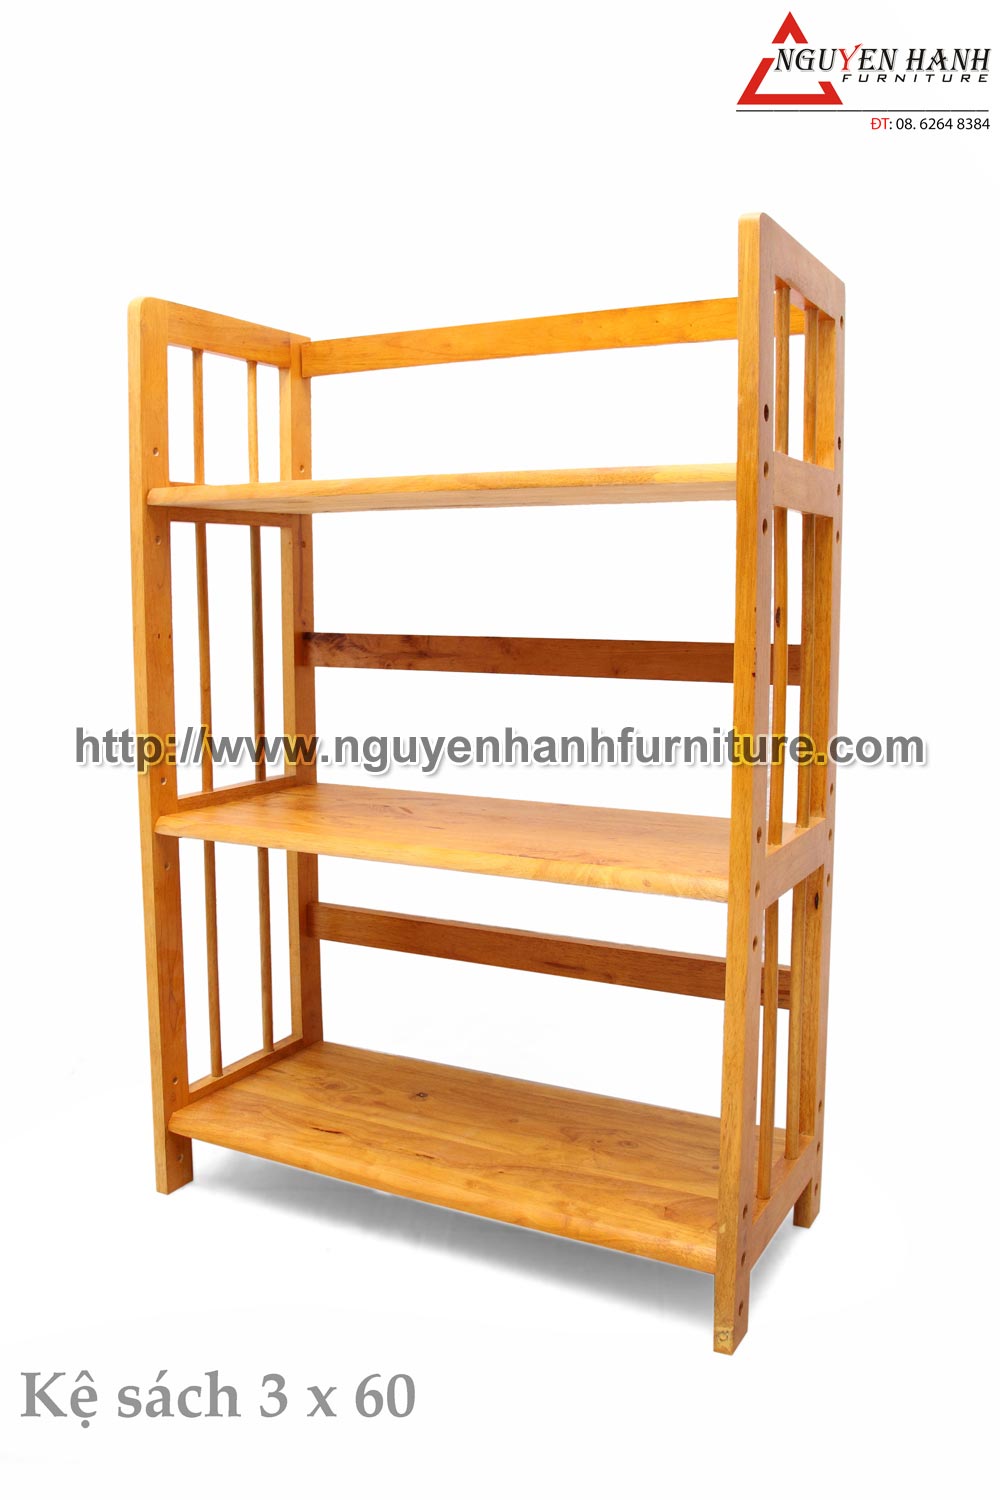 Name product: 3 storey Adjustable Bookshelf 60 